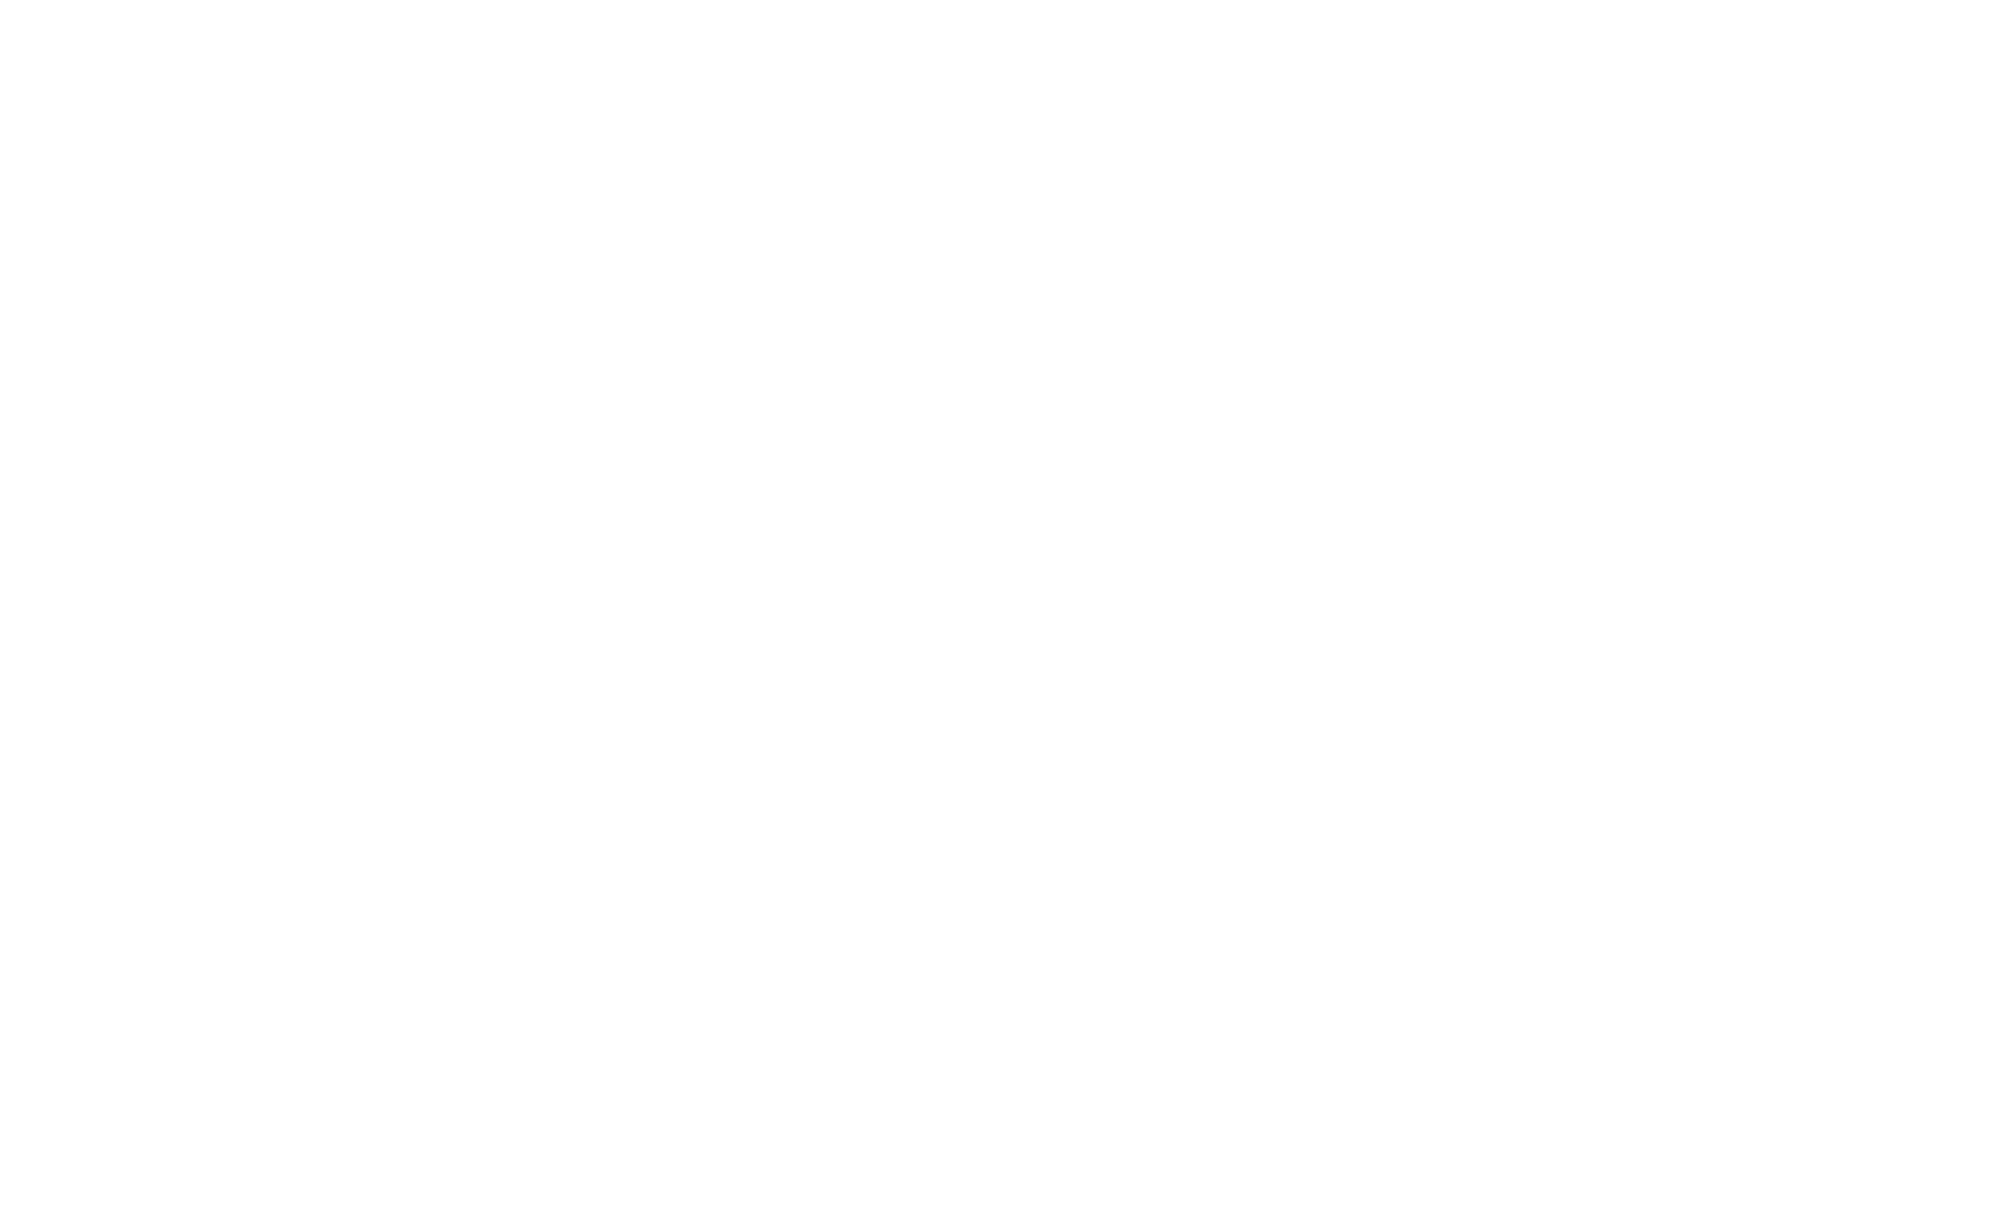 Jerrografie